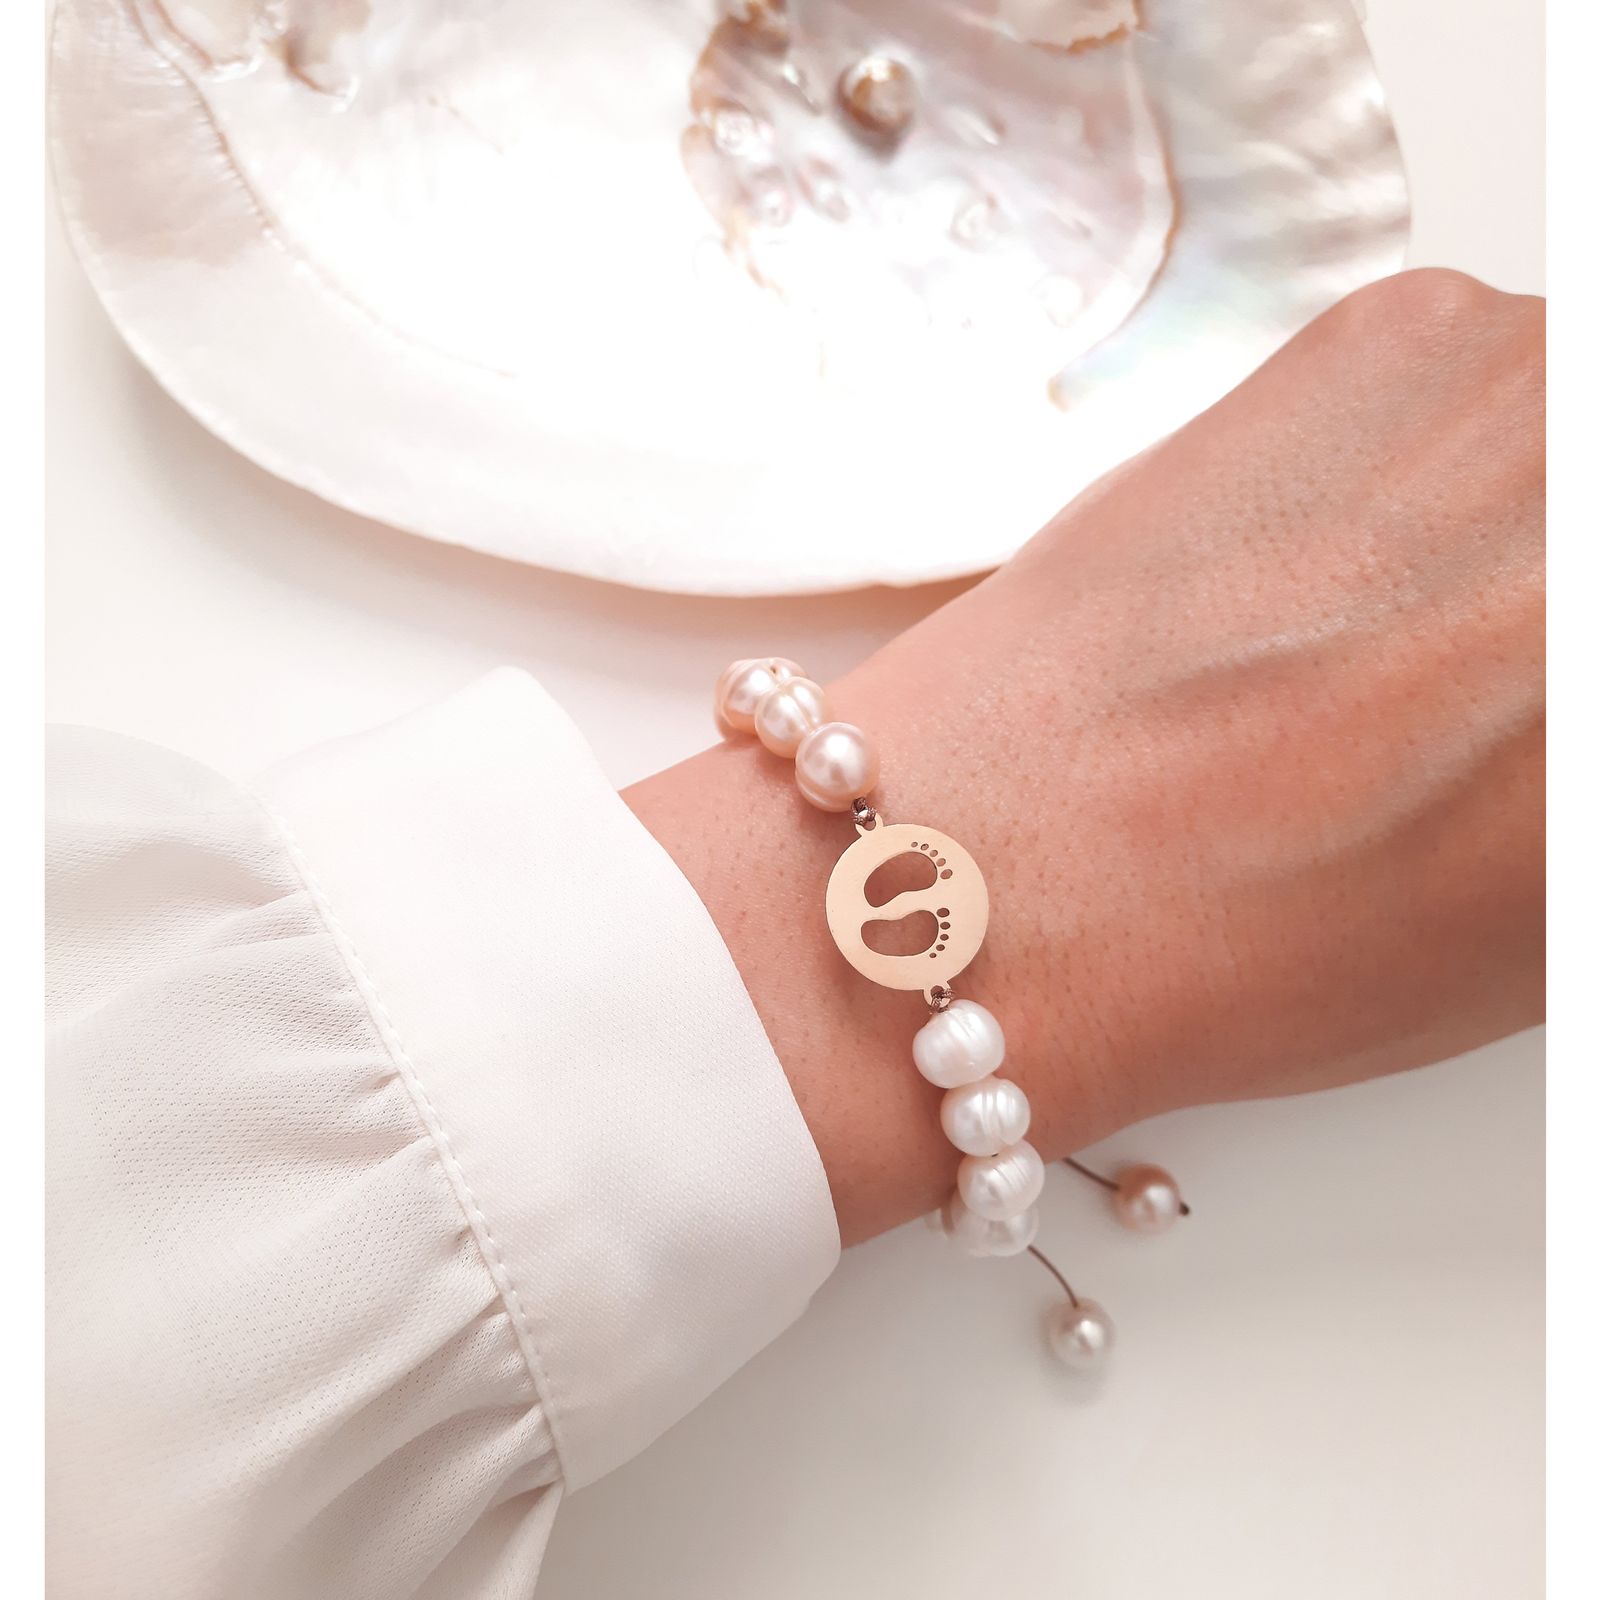 دستبند طلا 18 عیار دخترانه الماسین طرح پا مدل Foo01 -  - 2